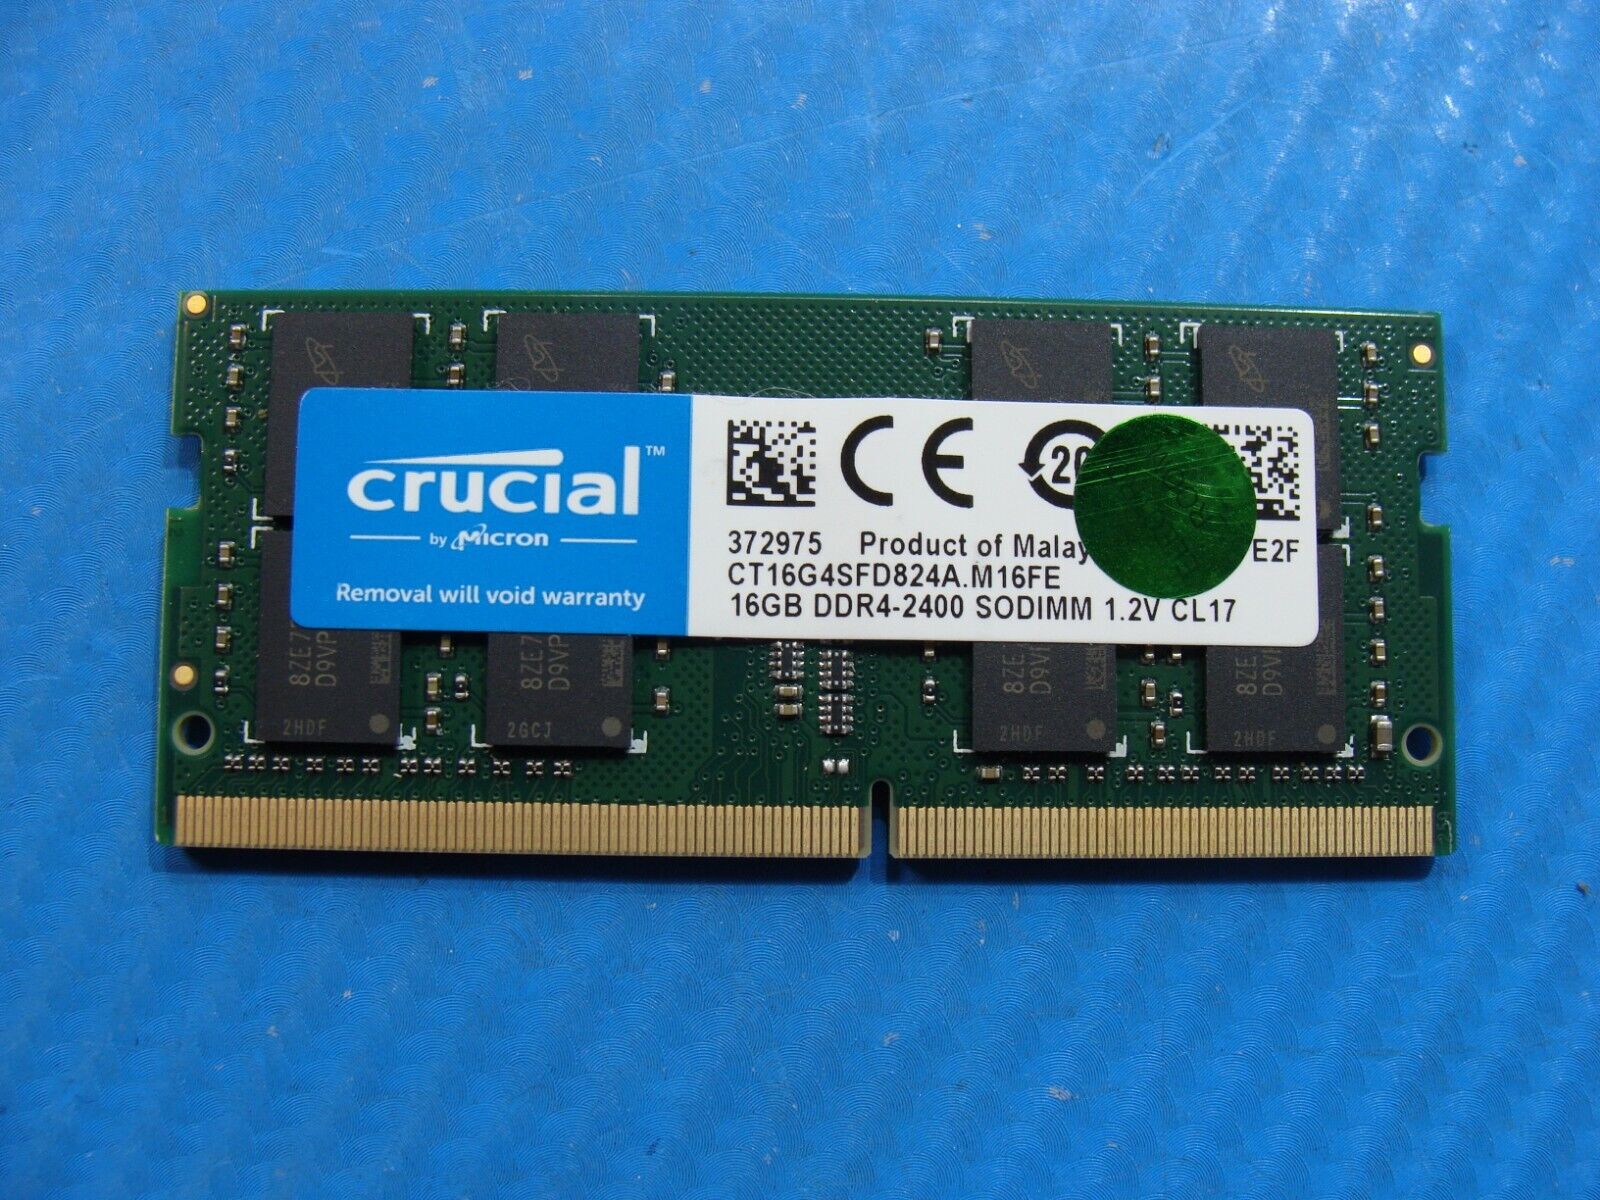 HP 850 G5 So-Dimm Crucial 16GB DDR4-2400 Memory RAM CT16G4SFD824A.M16FE